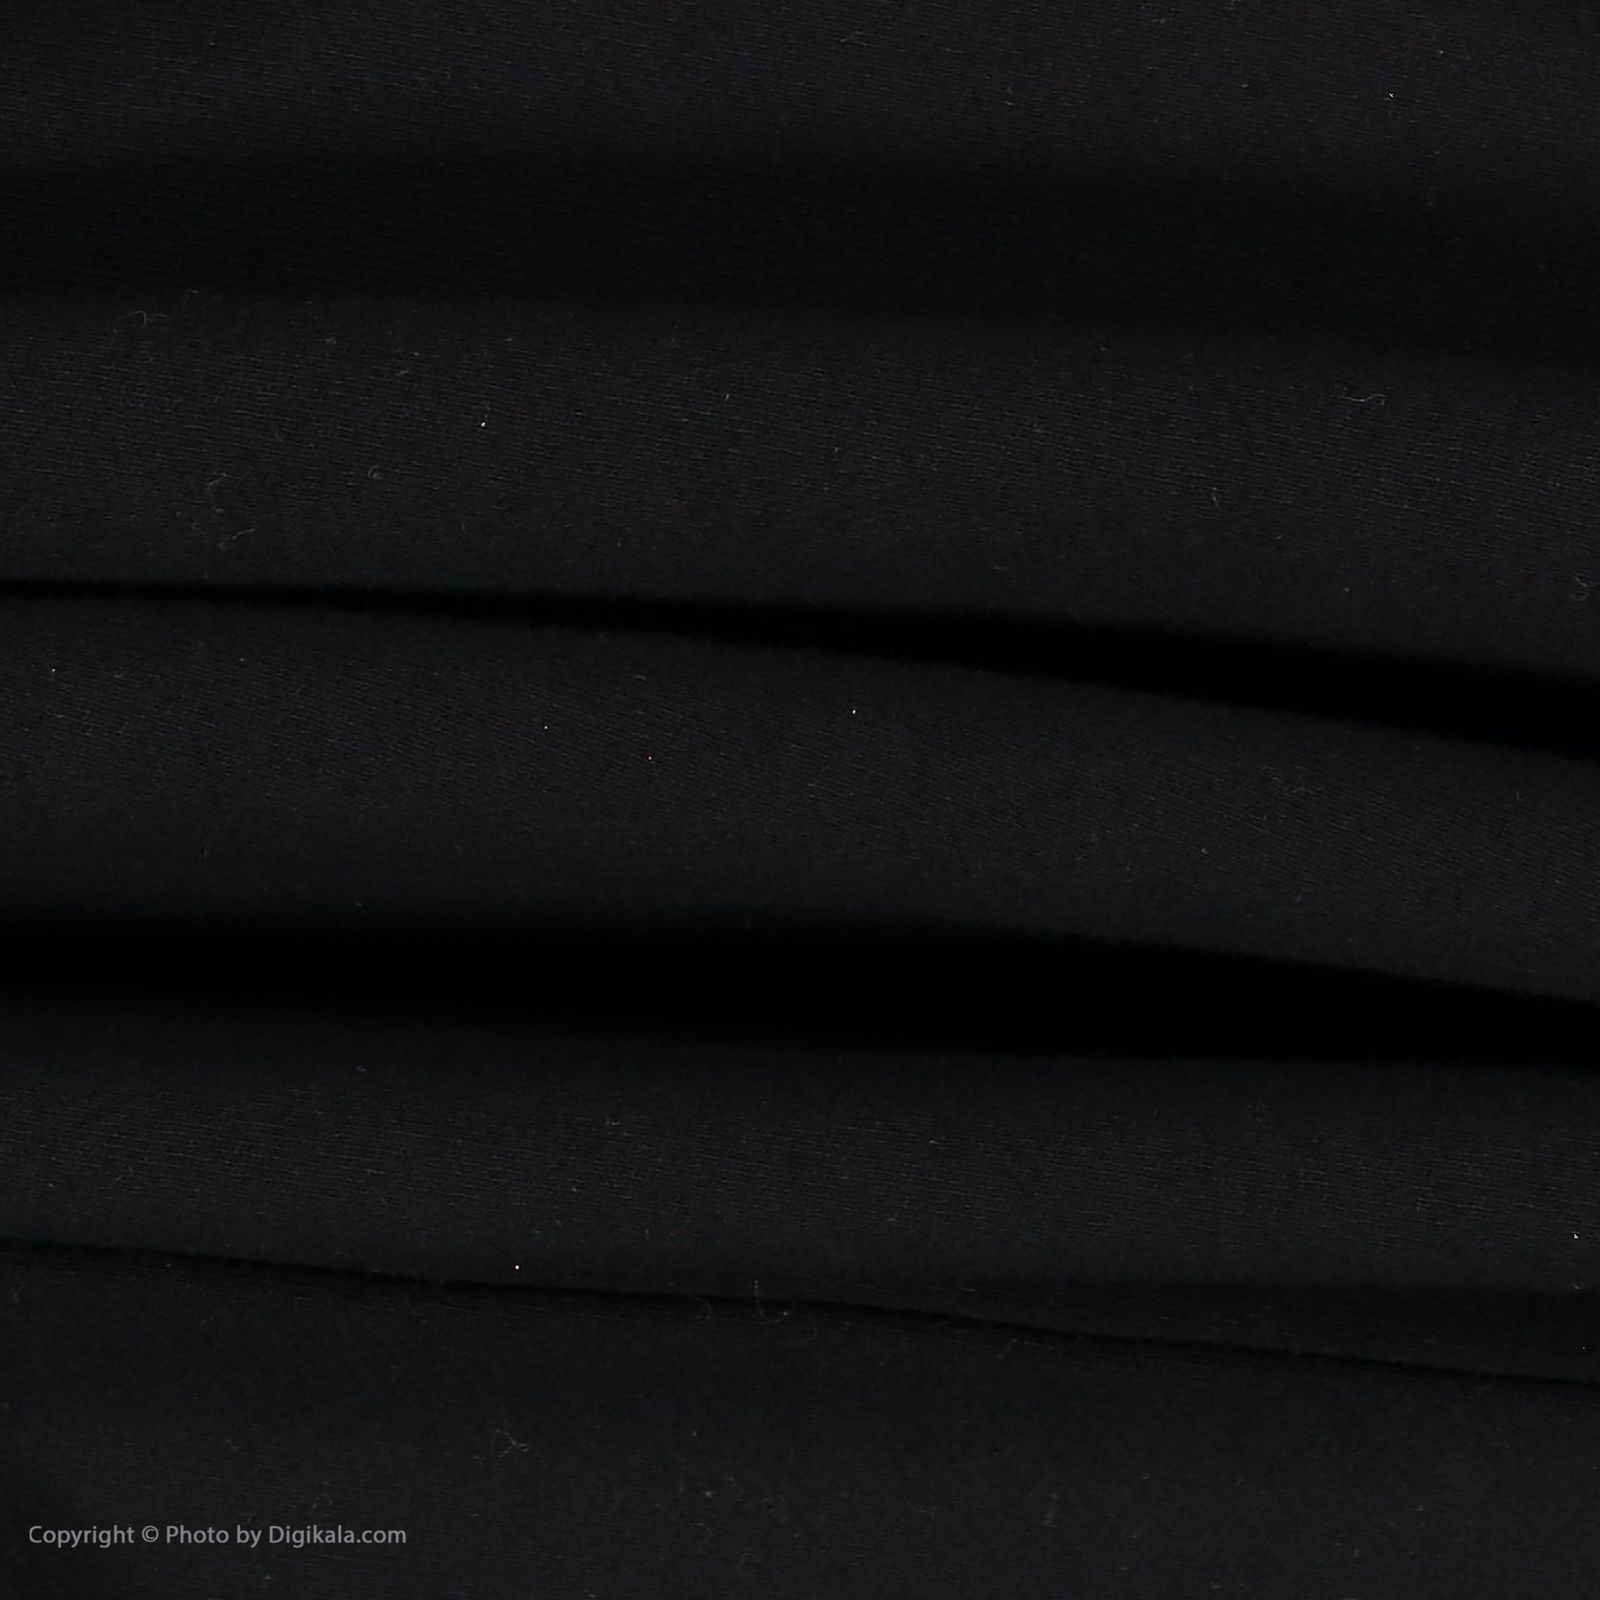 ست سویشرت و شلوارک بچگانه سیکس زیرو ناین مدل 1097-59 -  - 7